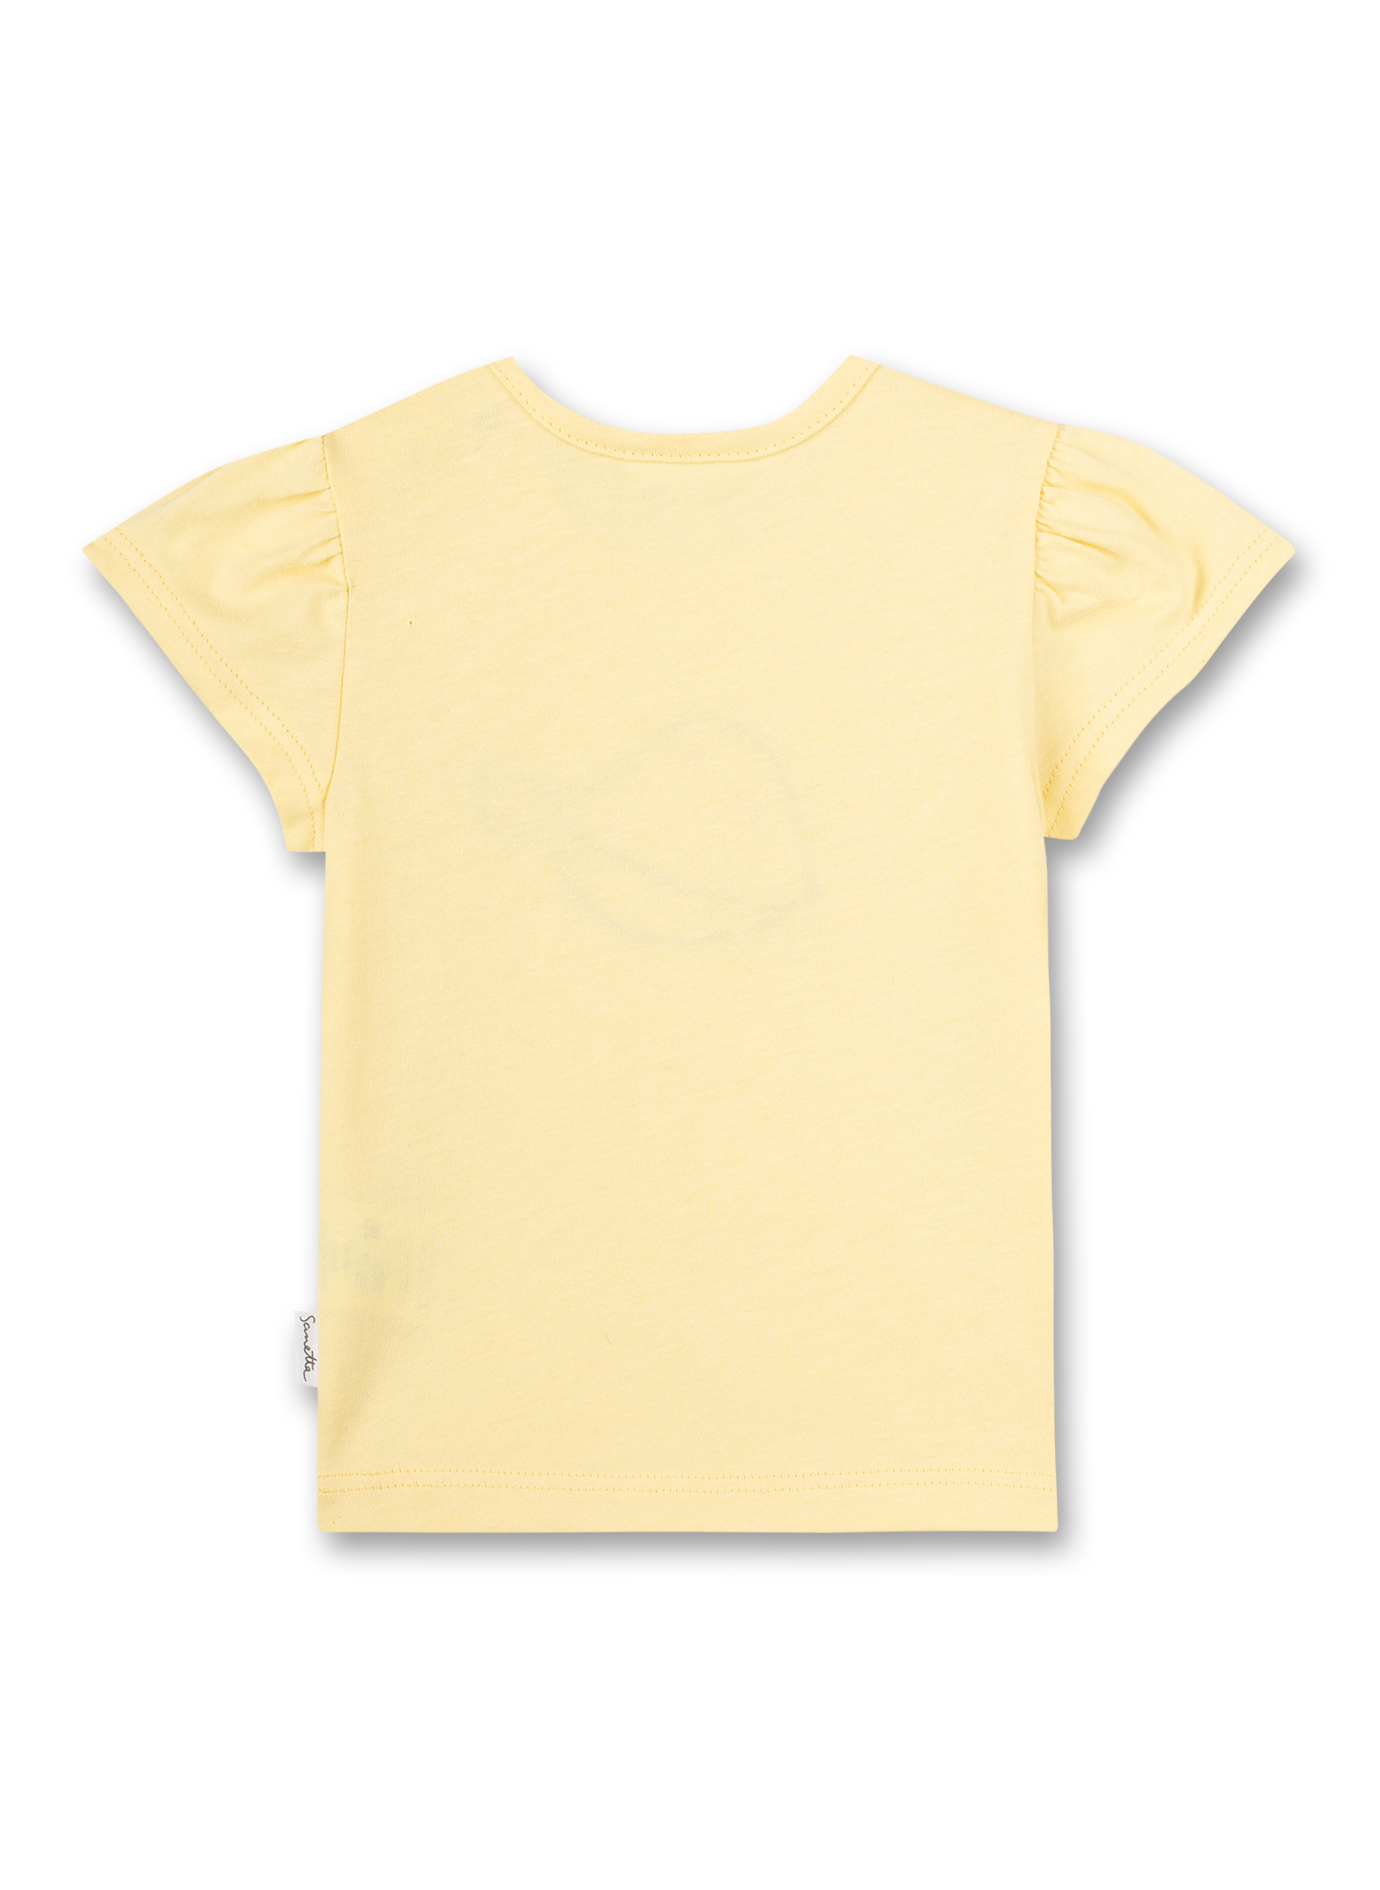 Mädchen T-Shirt Gelb